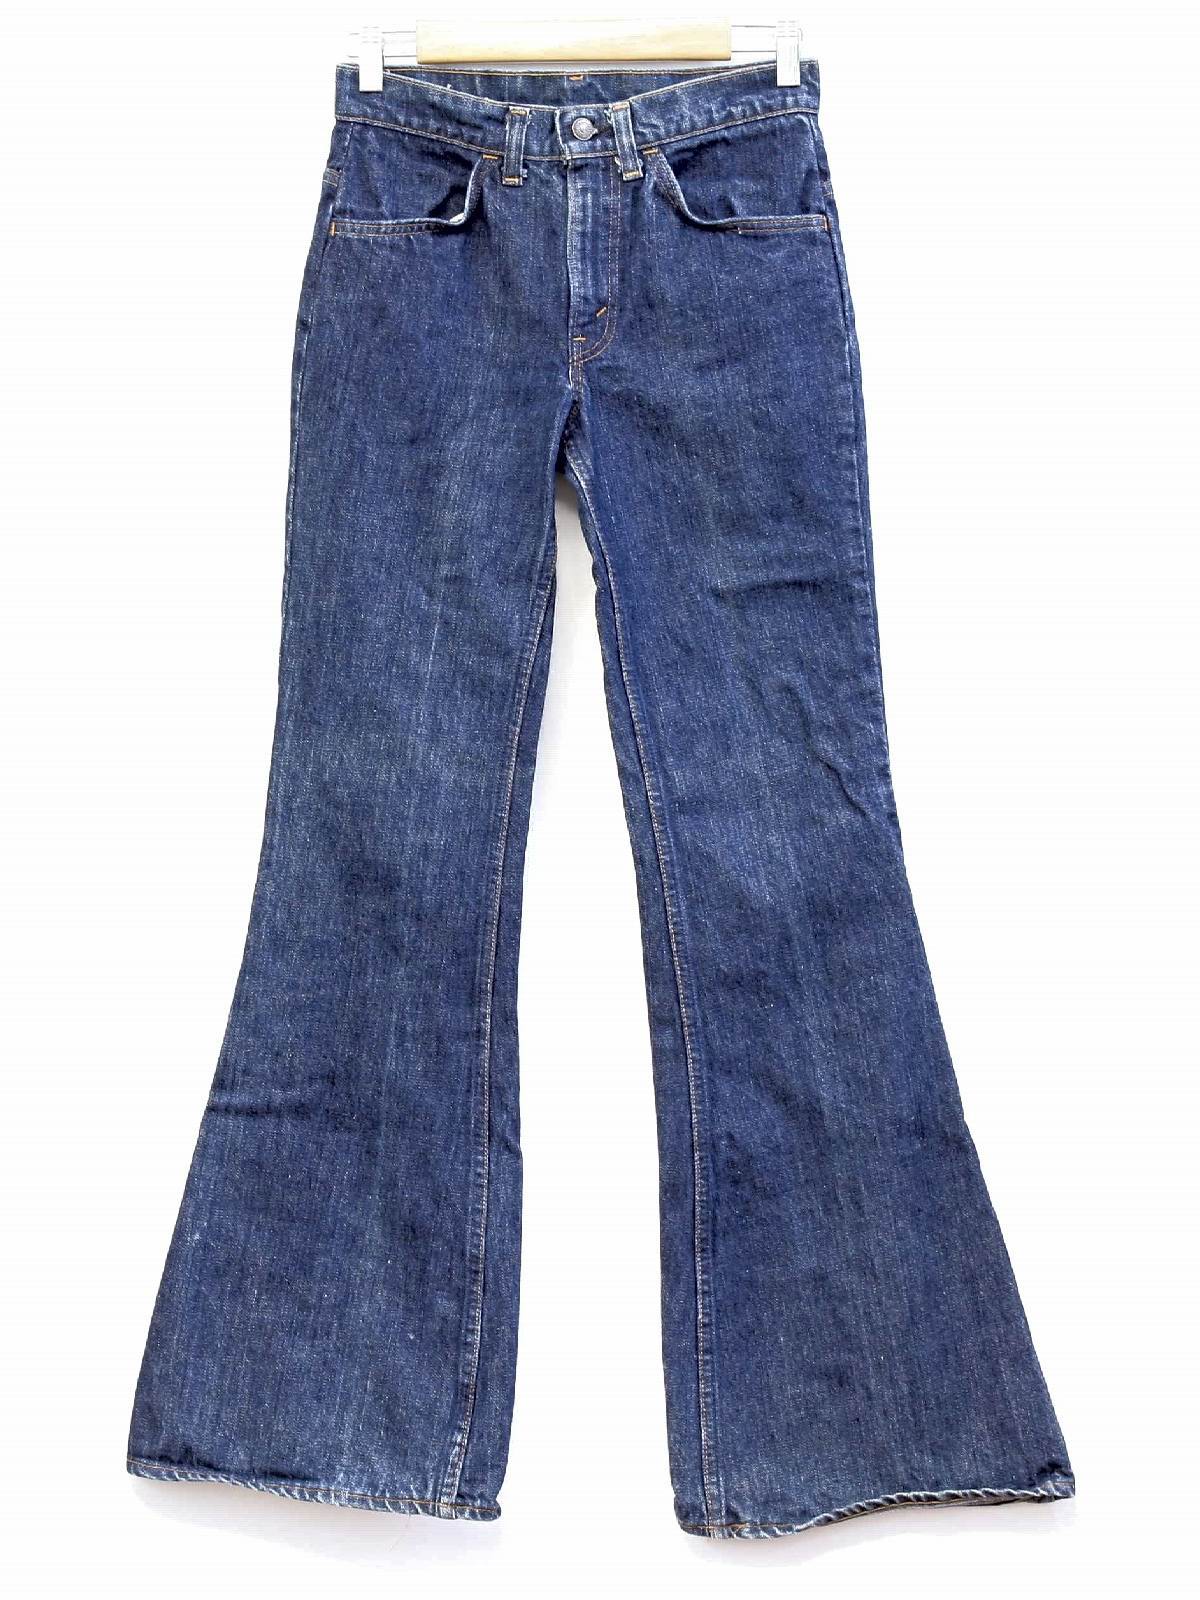 Retro 1970s Bellbottom Pants: 70s -Levis- Mens dark blue background ...